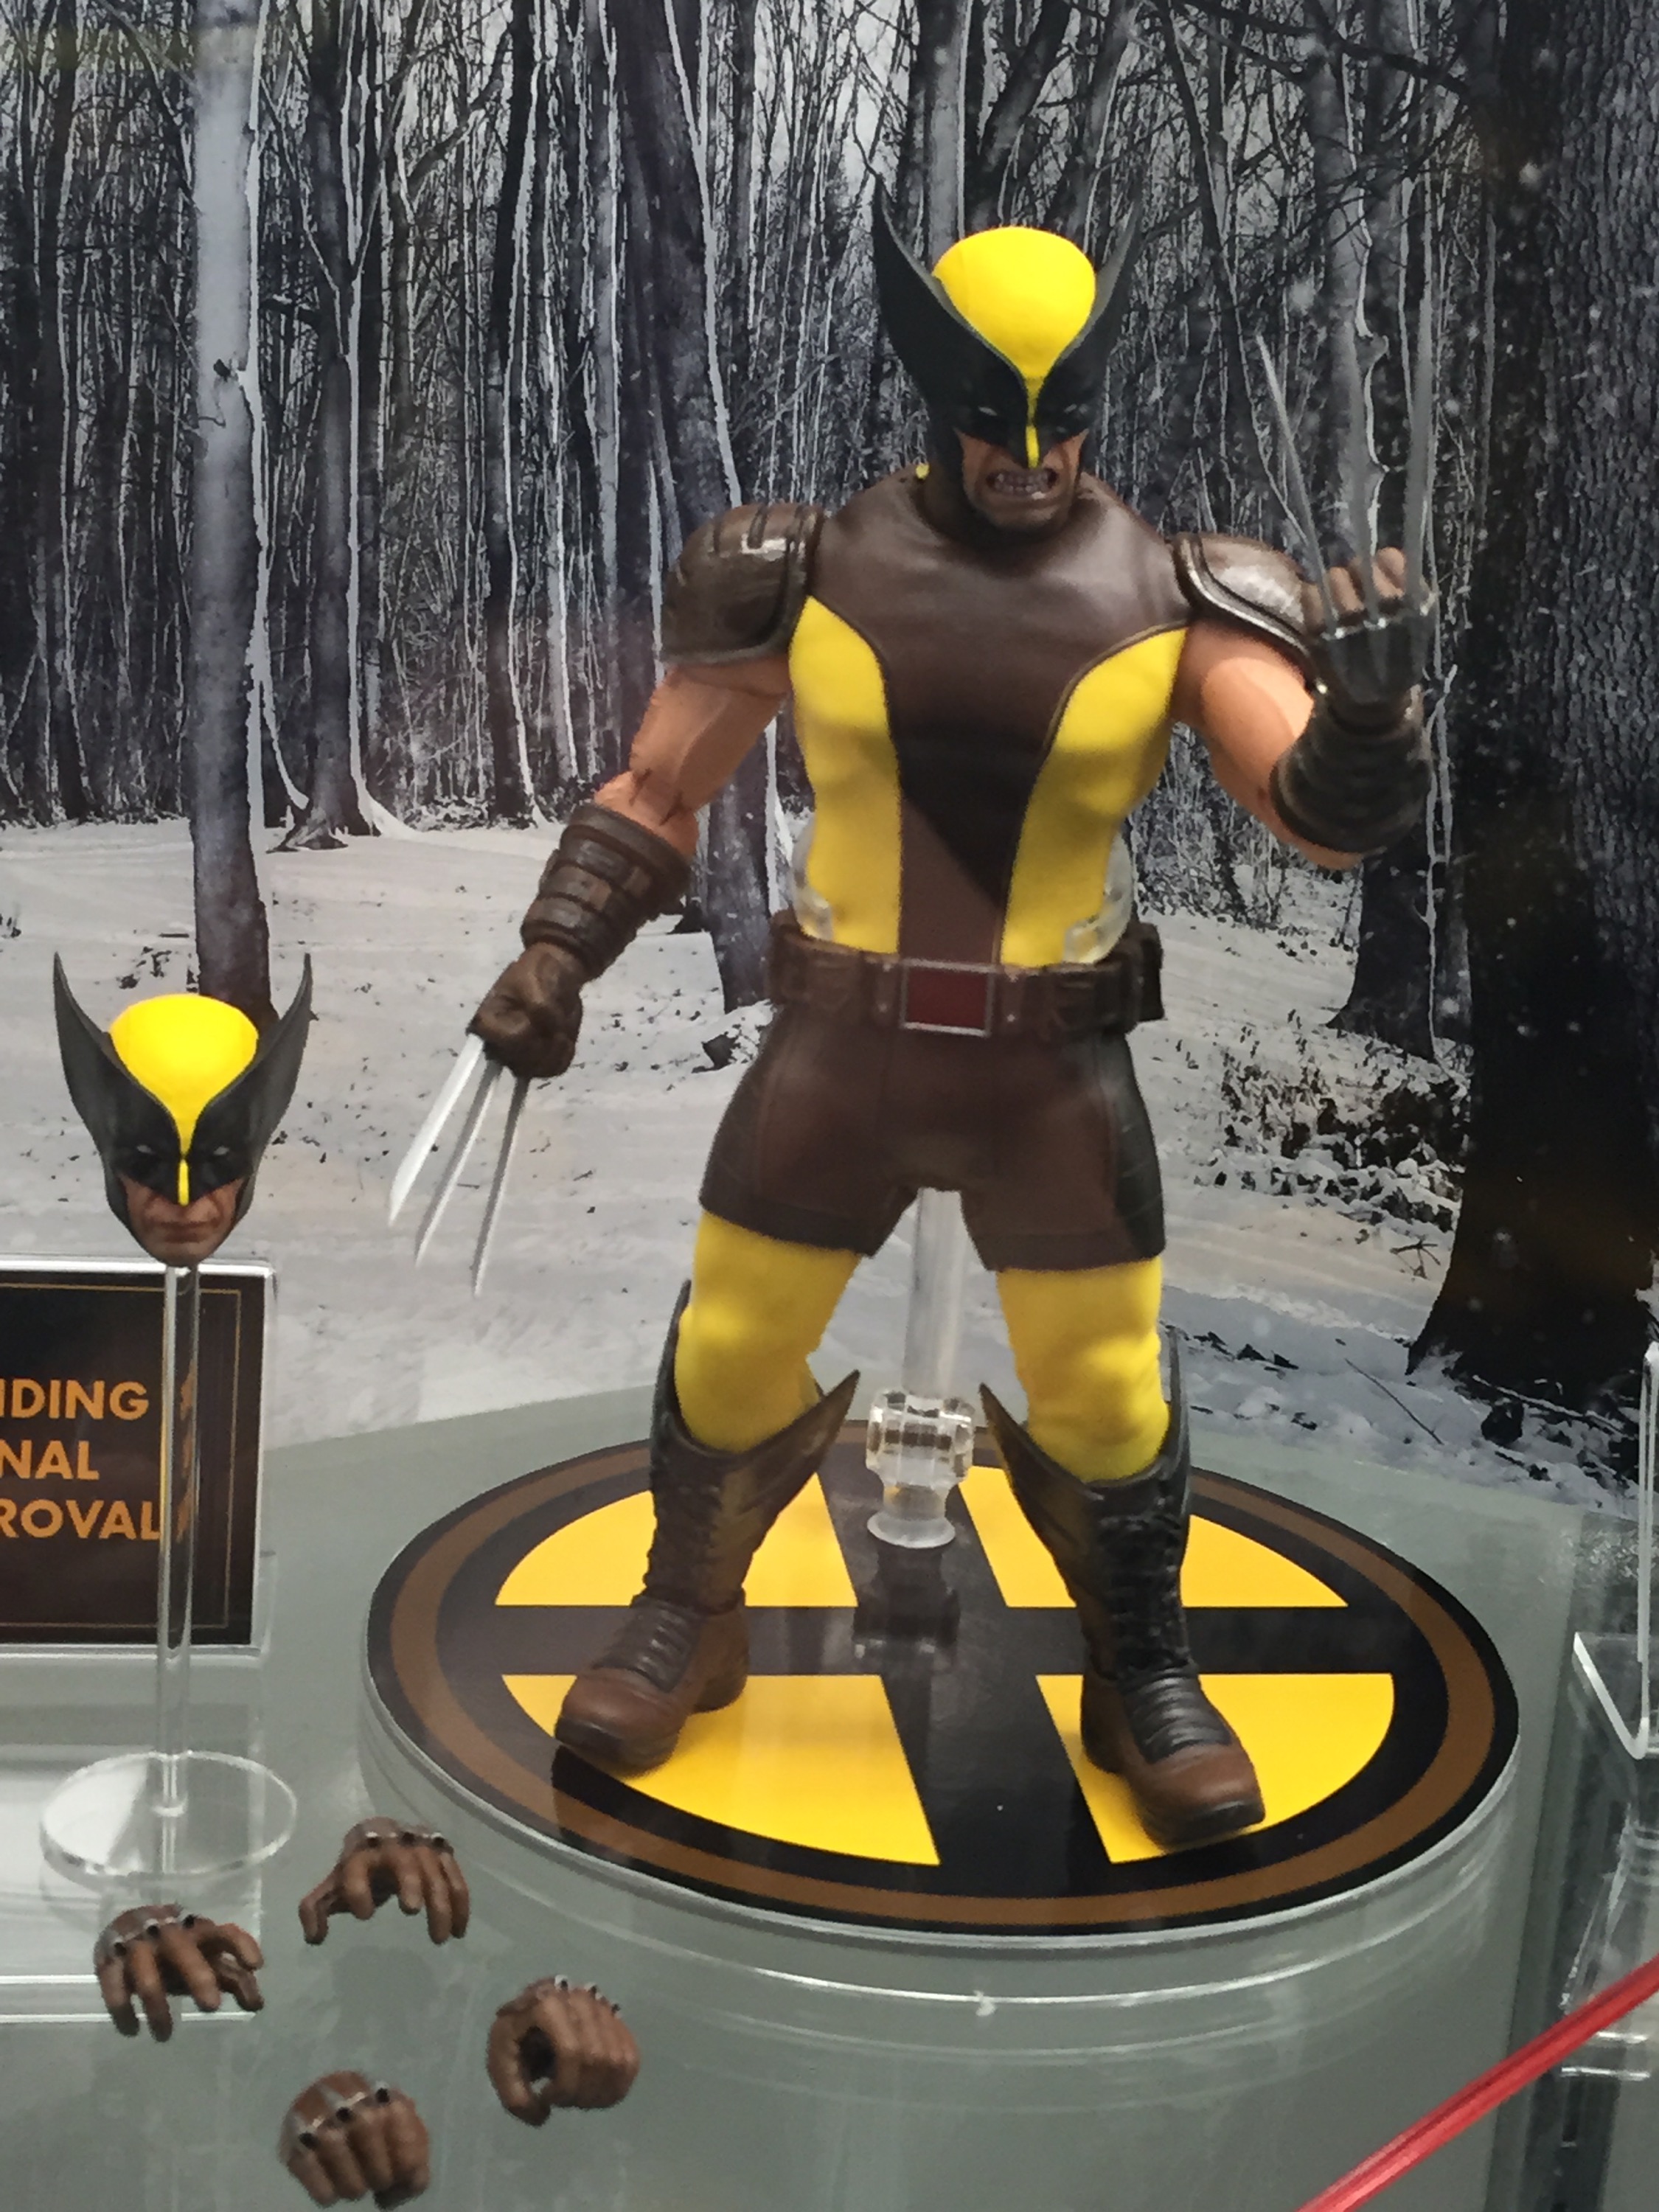 Mezco Marvel ONE:12 Collective Wolverine Figure Up for Order! - Marvel